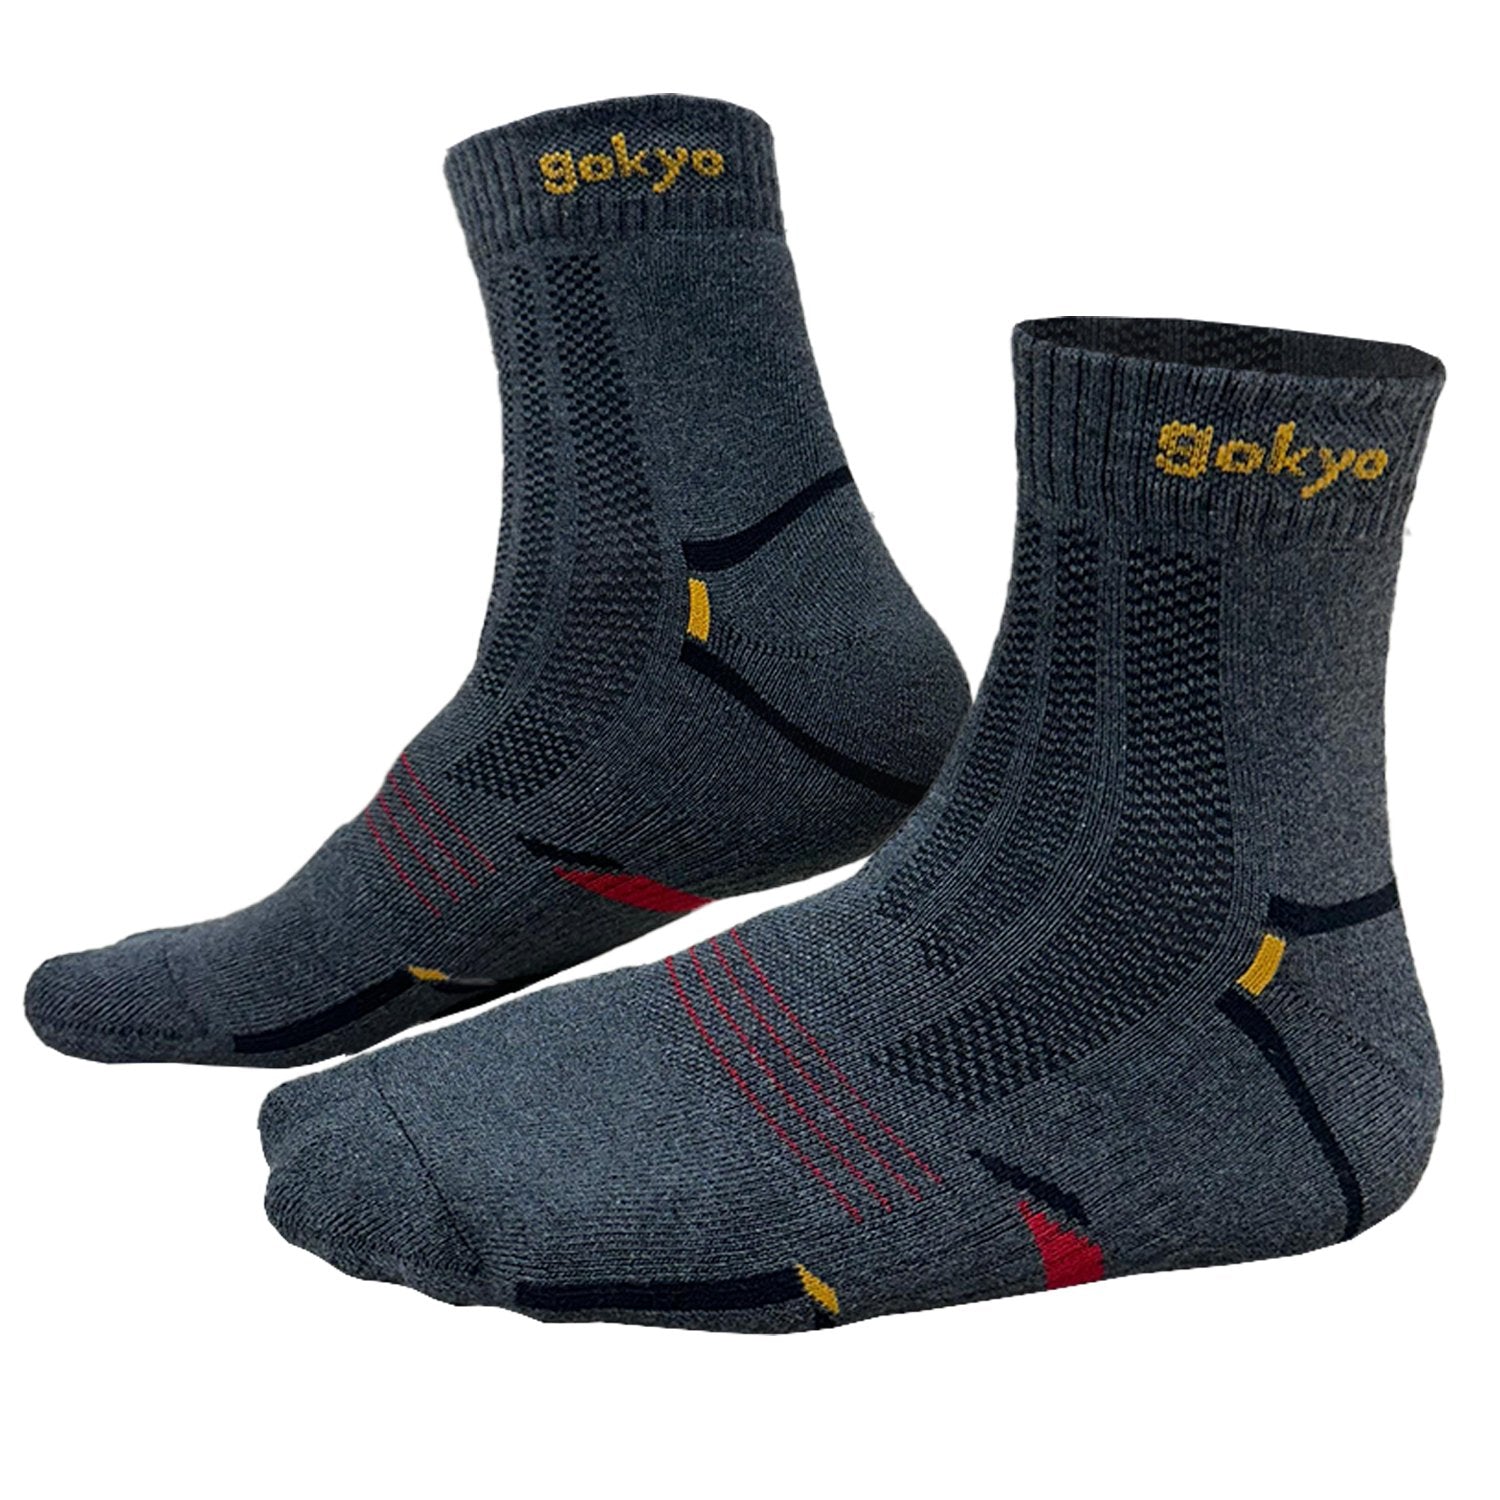 Buy Gokyo Comrade Running Socks UK 7-11 Grey UK 7-11 | Socks at Gokyo Outdoor Clothing & Gear